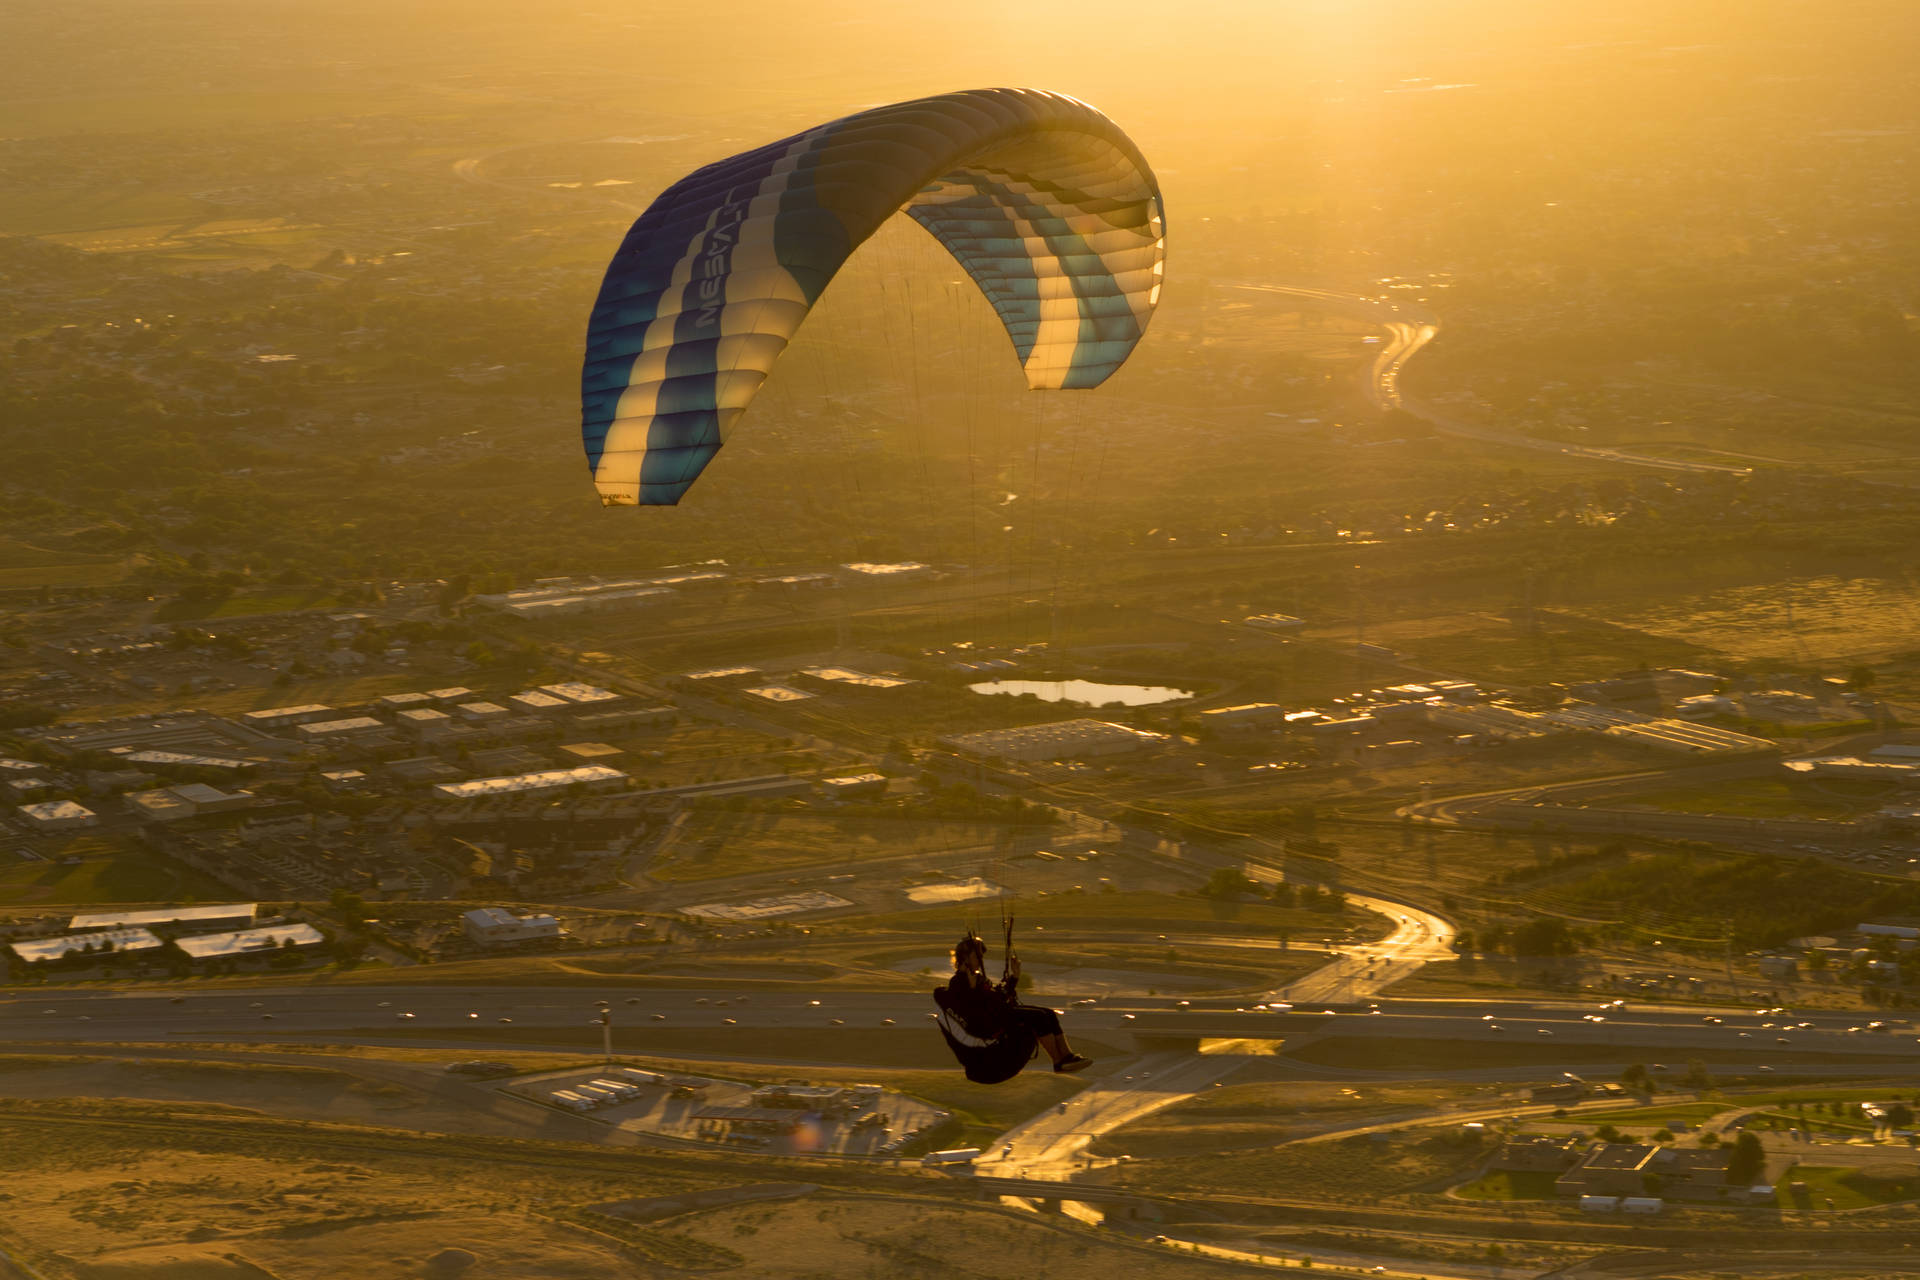 Paraglidinggegen Strahlenden Sonnenuntergang. Wallpaper